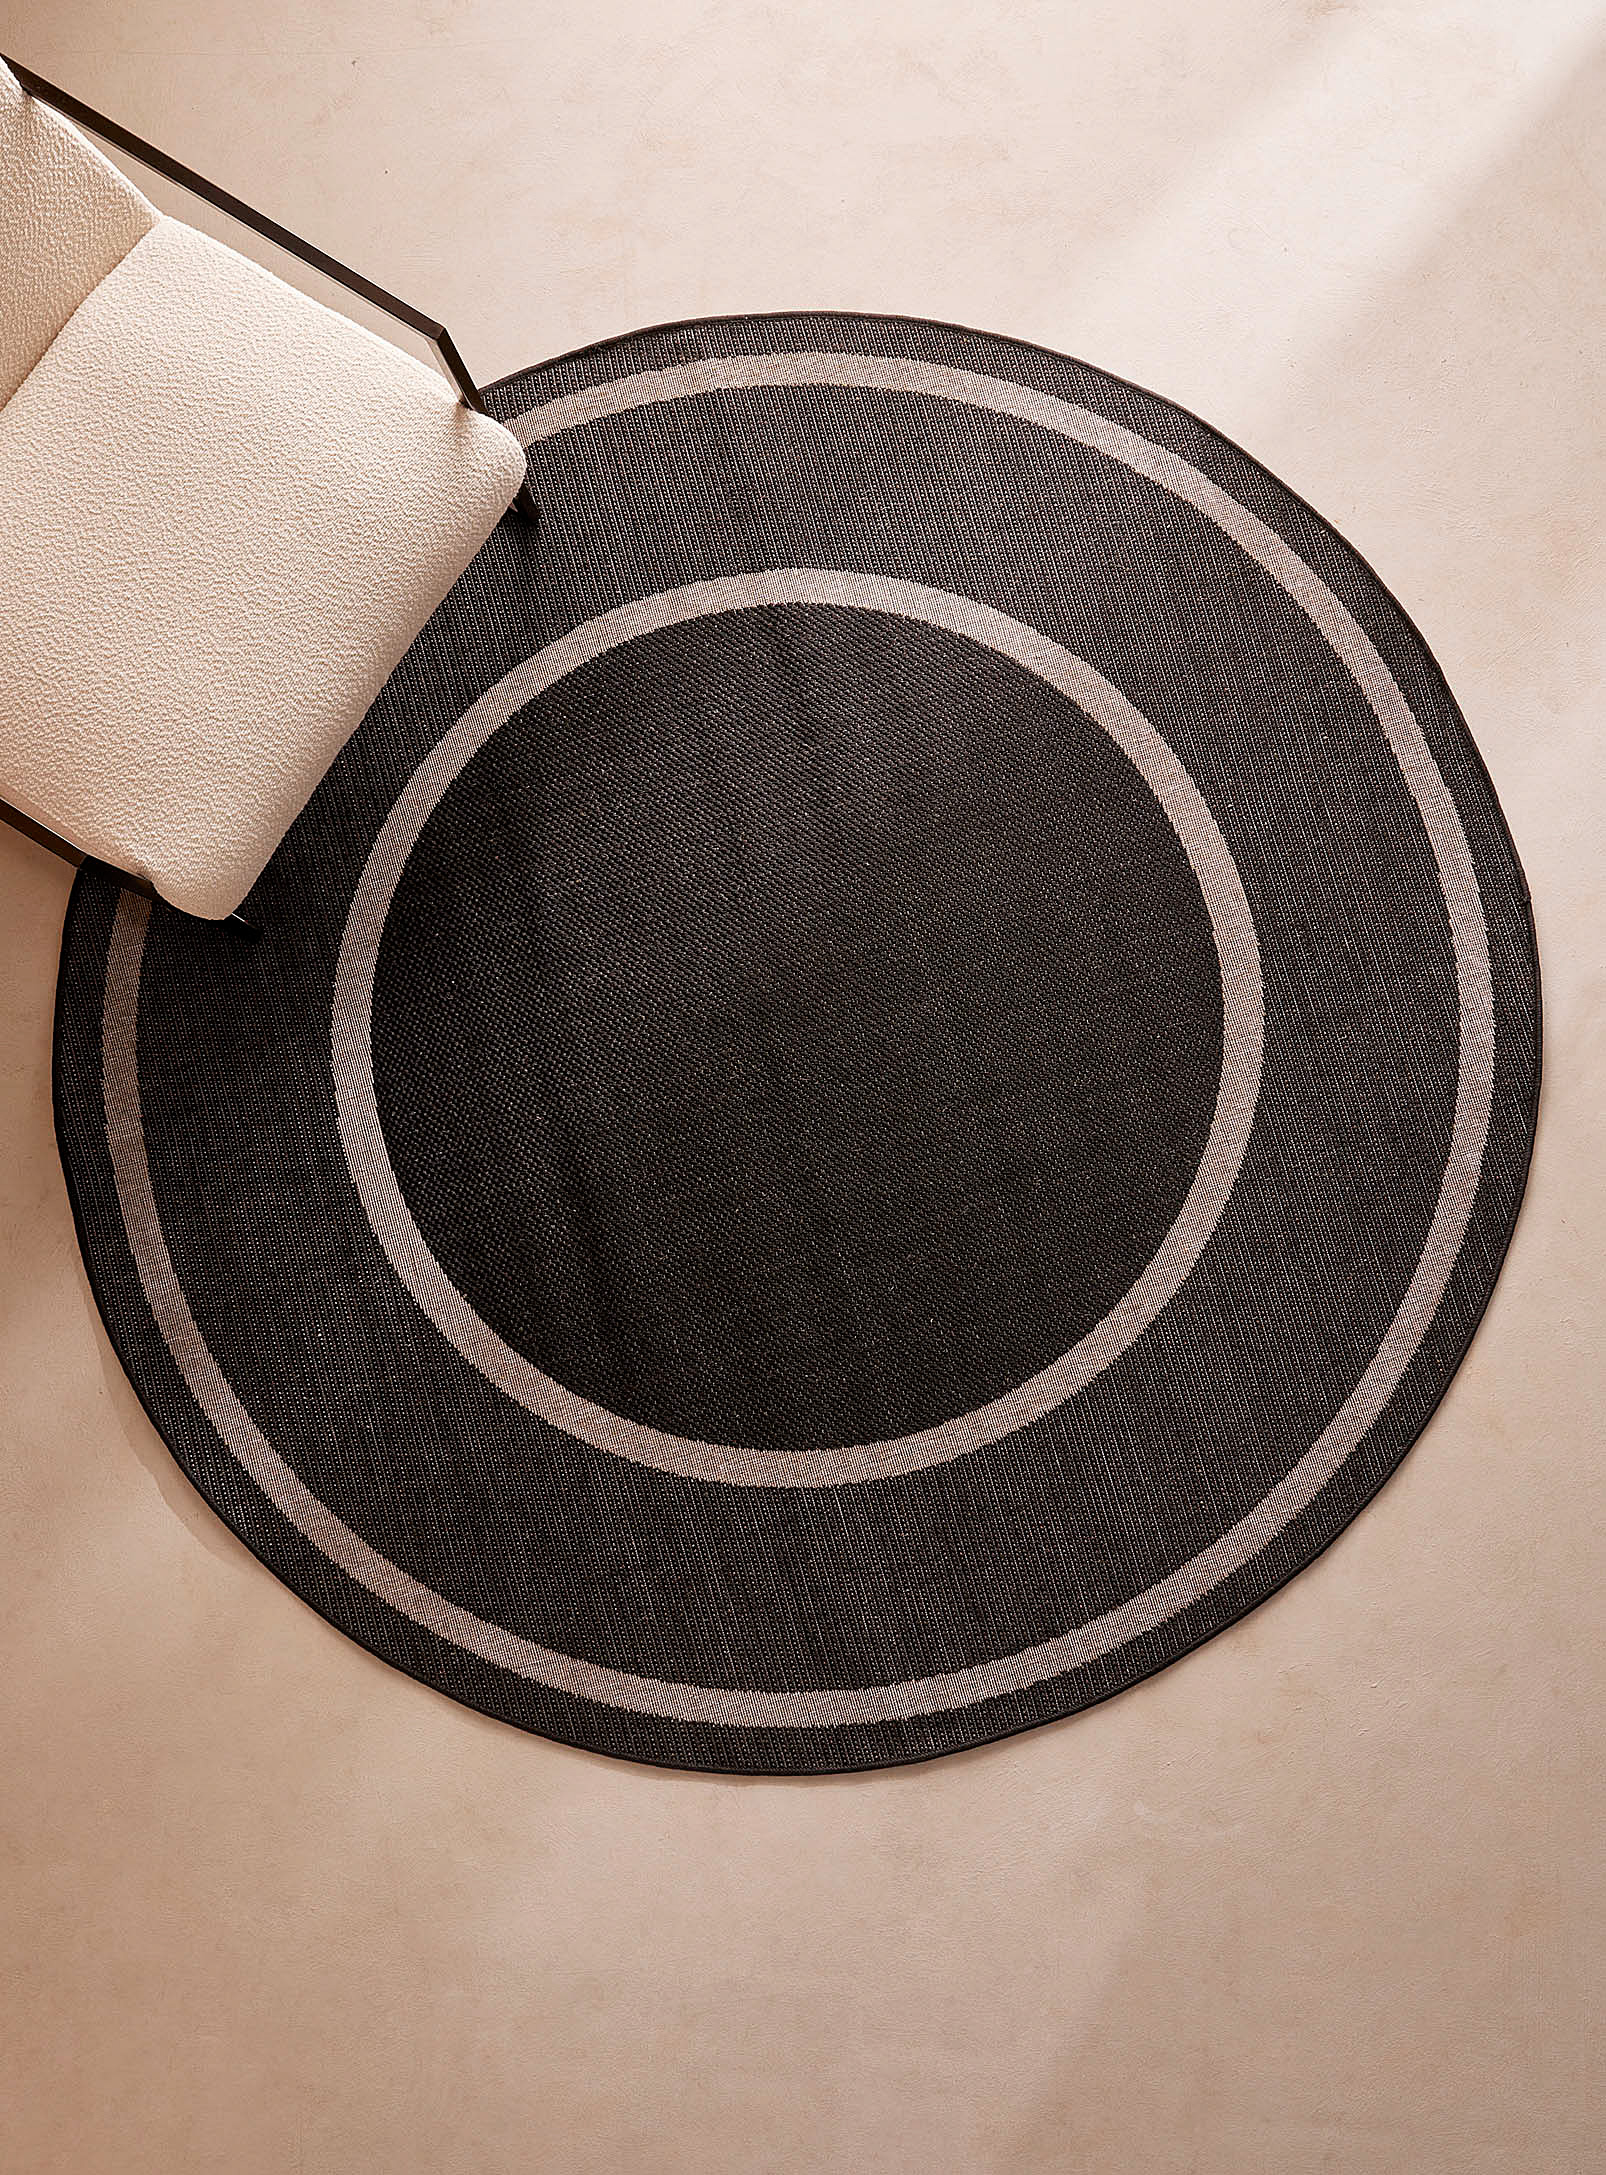 Simons Maison - Jute-like circular rug 200 cm in diameter